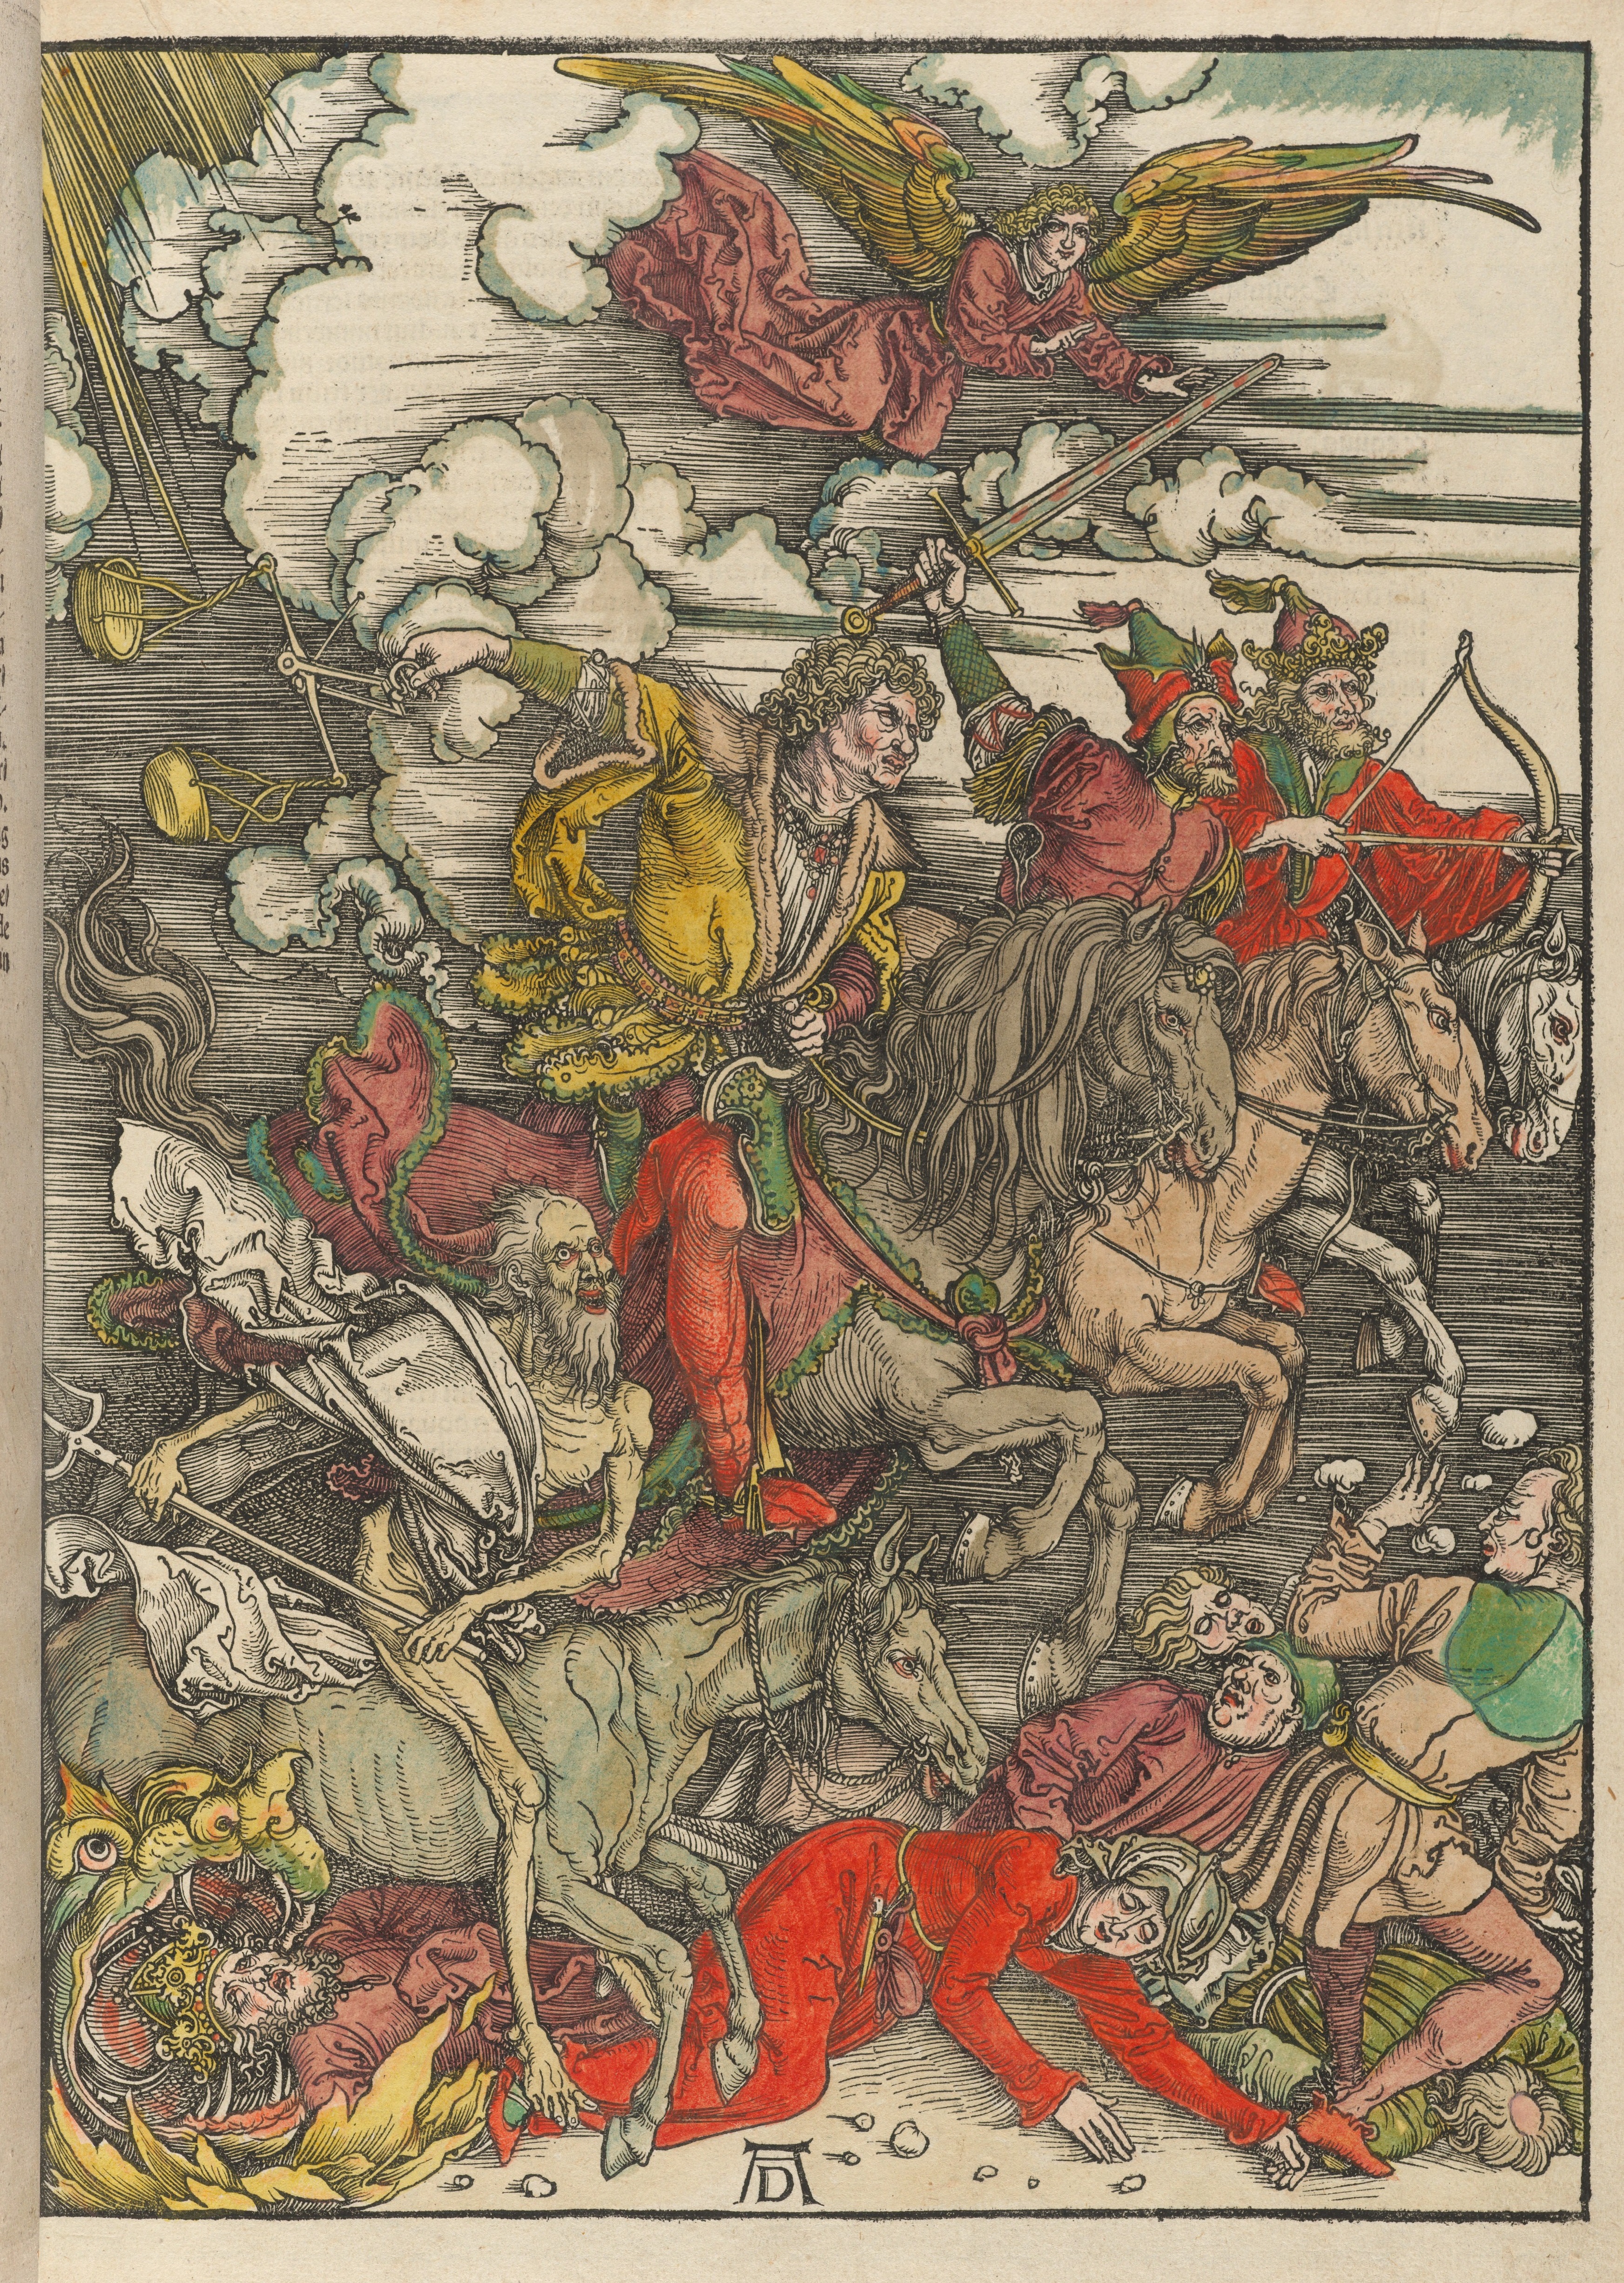 Albrecht Dürer, The Four Apocalyptic Horsemen, 1498. Source: wikimedia